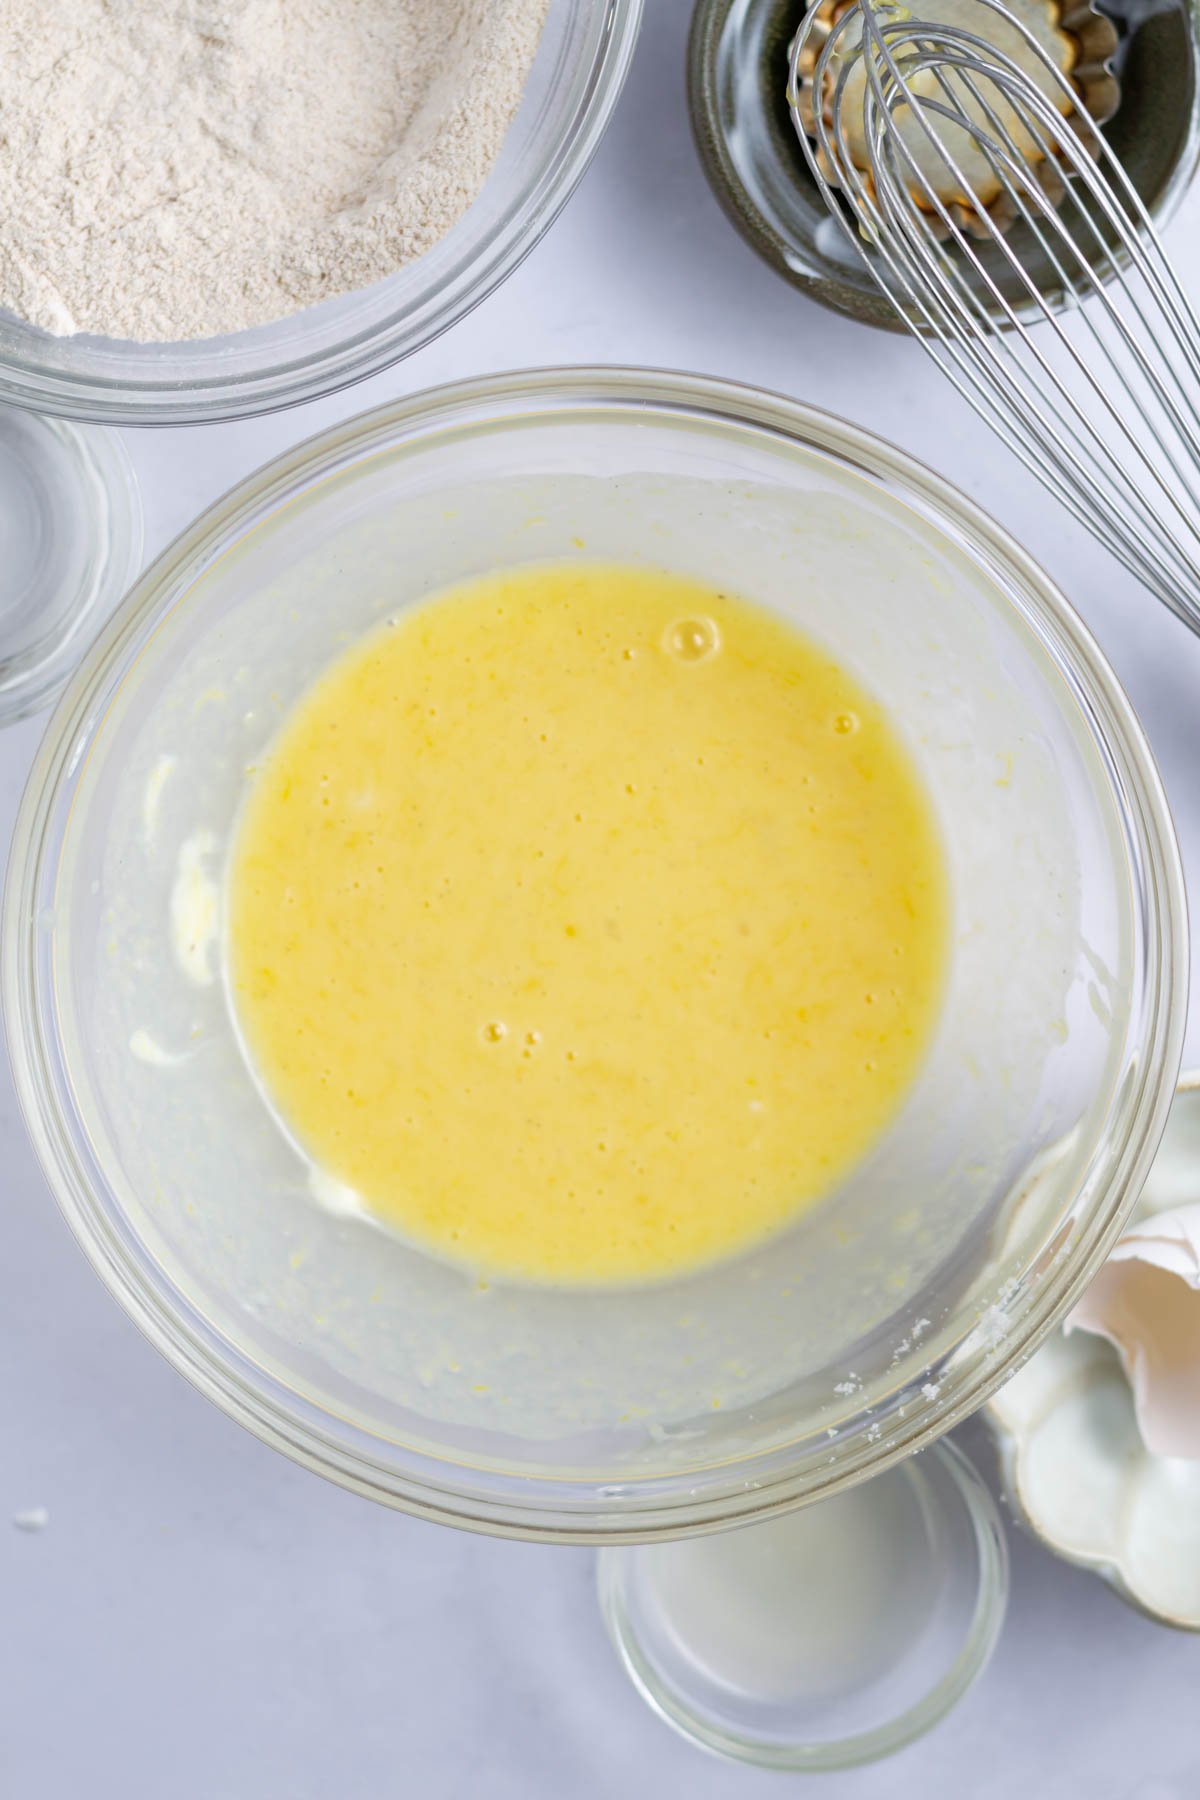 egg, lemon zest, sugar, vanilla, and greek yogurt whisked together in a mixing bowl.